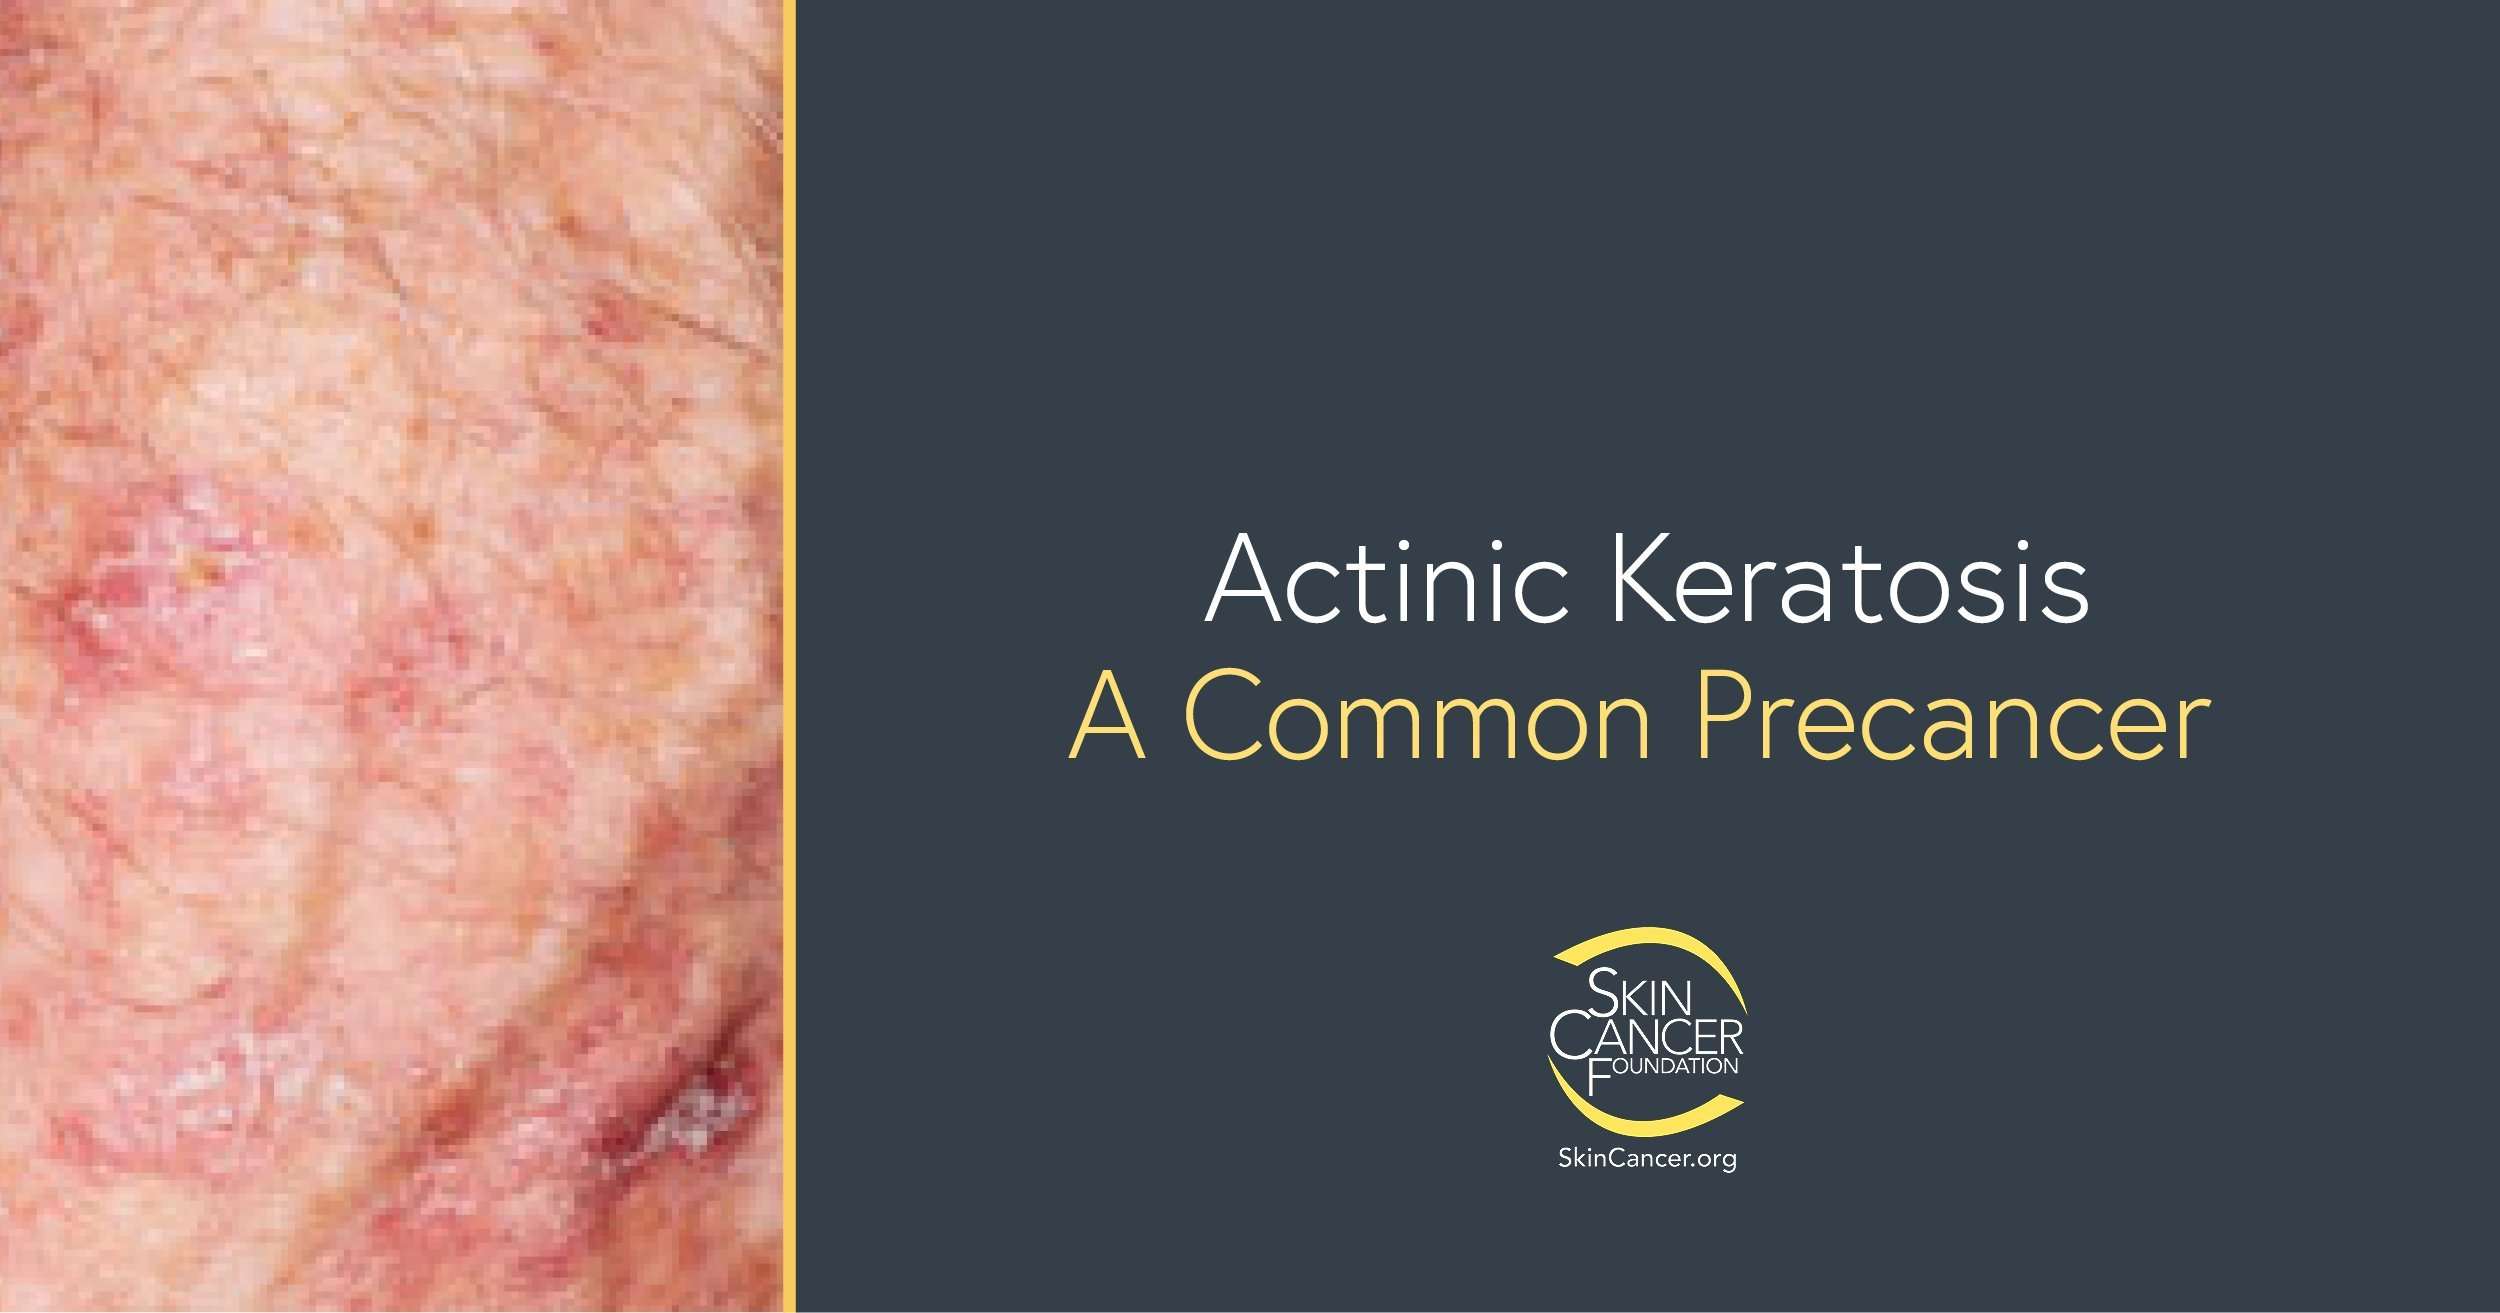 Actinic Keratosis Treatment